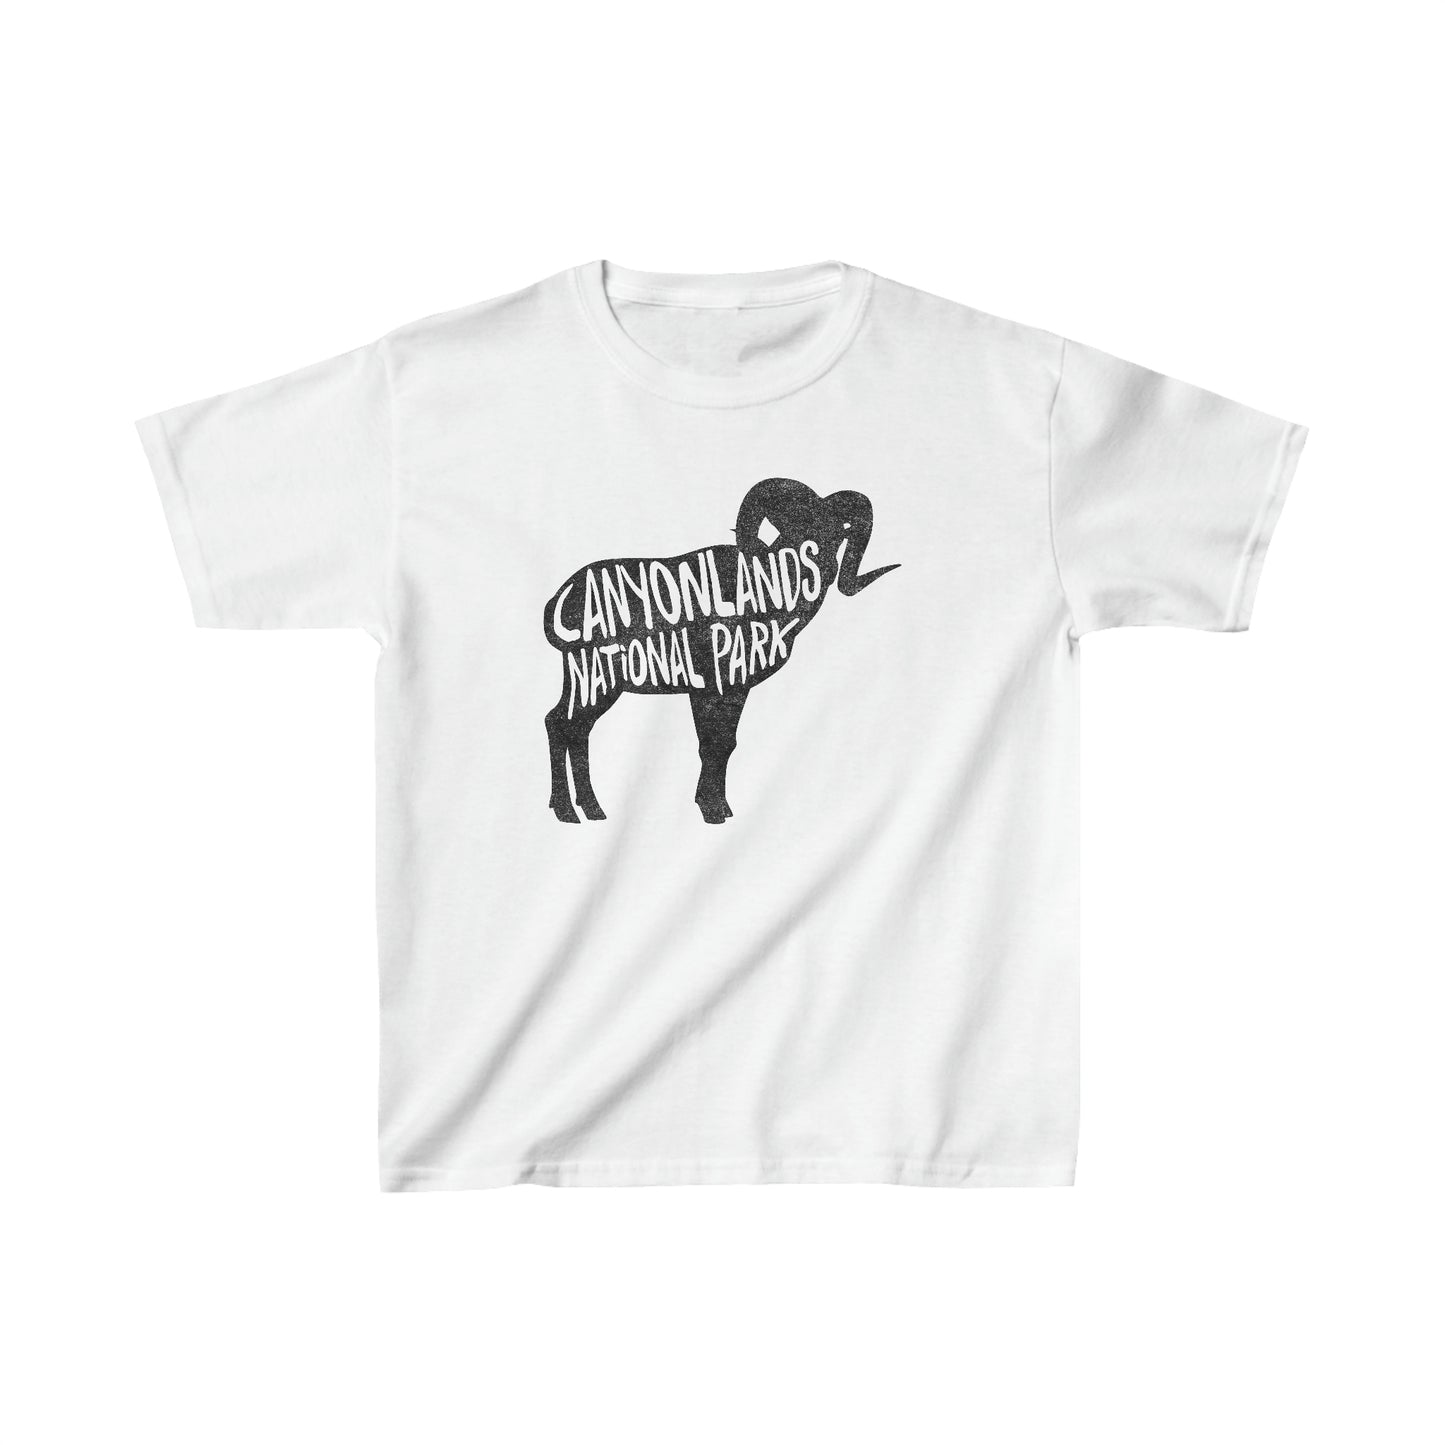 Canyonlands National Park Child T-Shirt - Bighorn Sheep